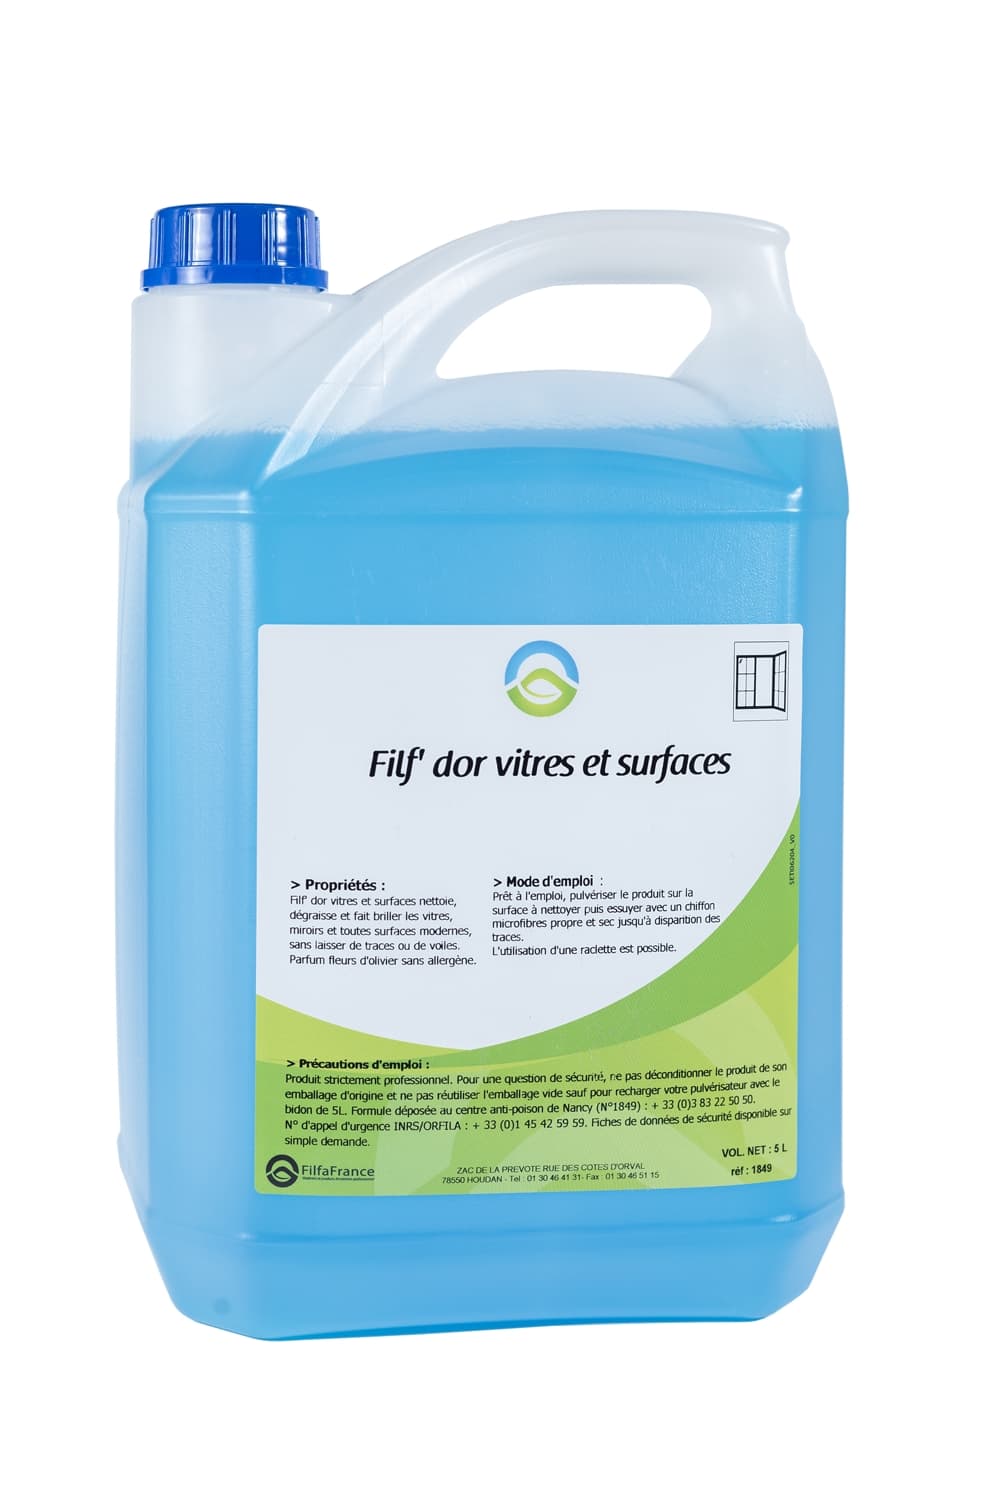 FILFA FRANCE - Filf' dor vitres et surfaces - Parfum fleurs d'olivier - 5L